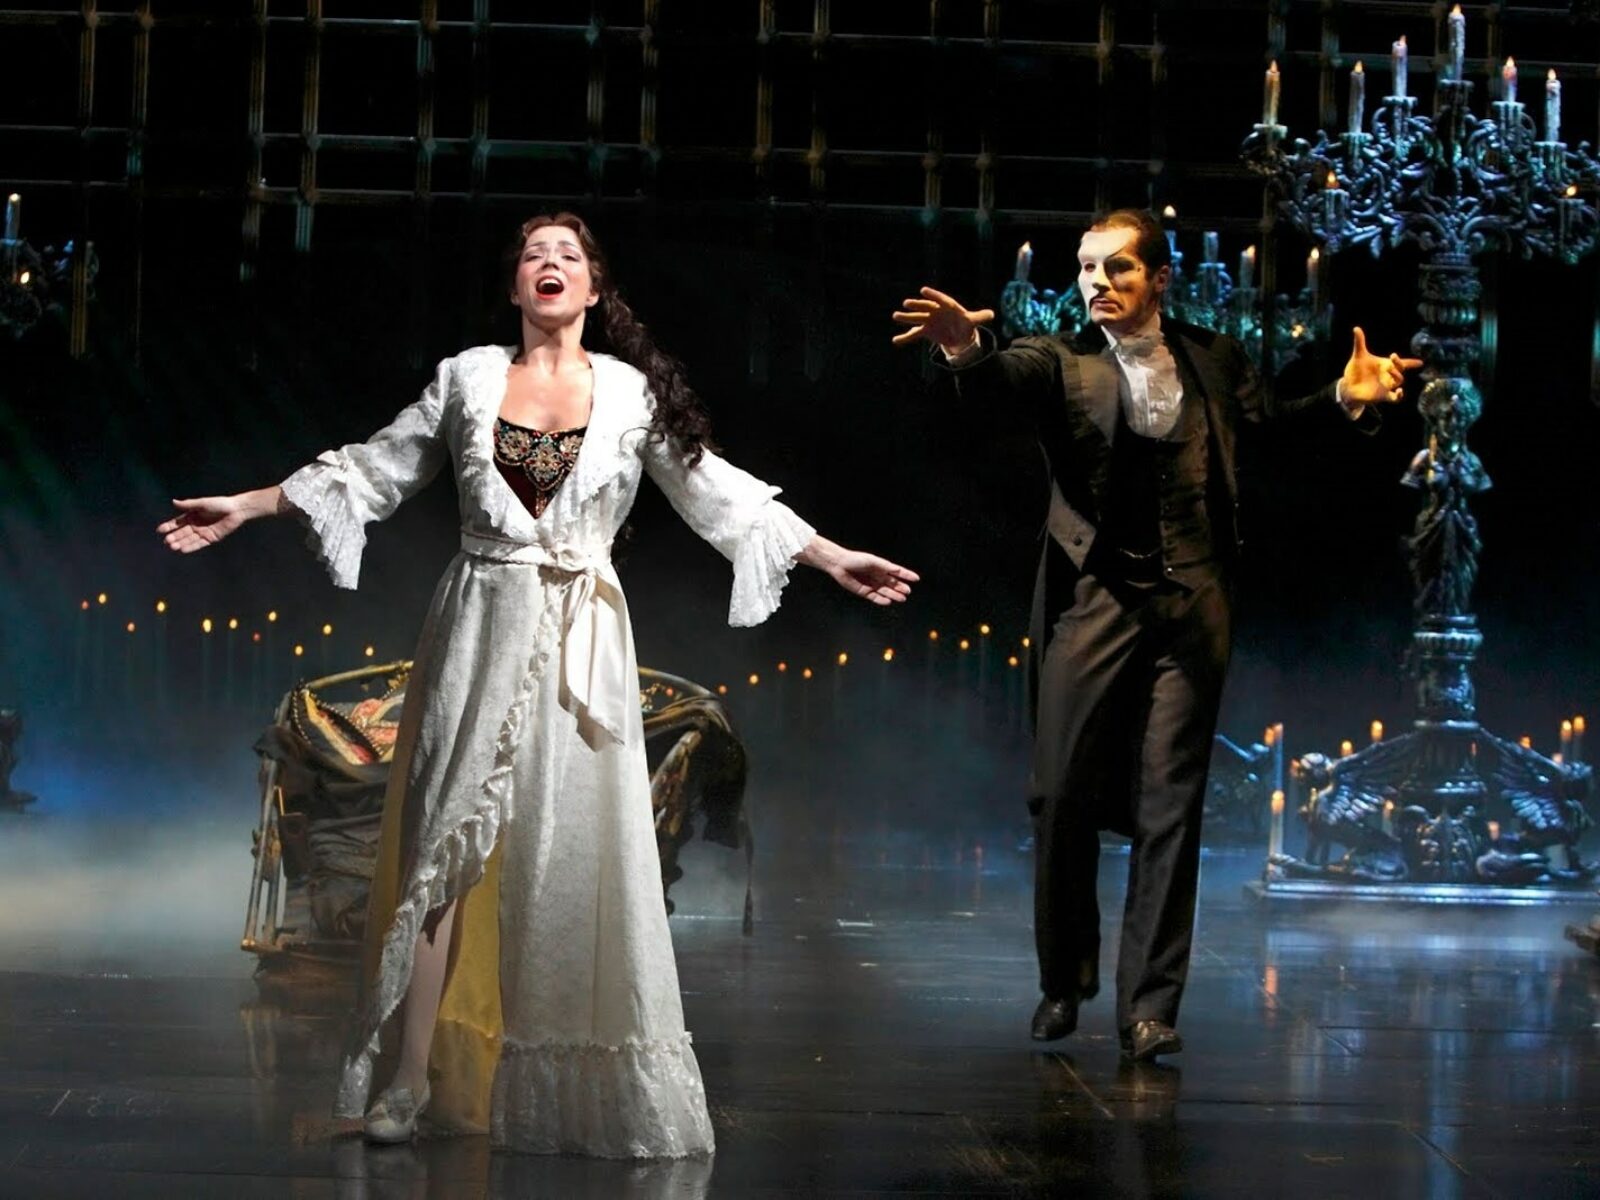 discount phantom of the opera tickets new york city